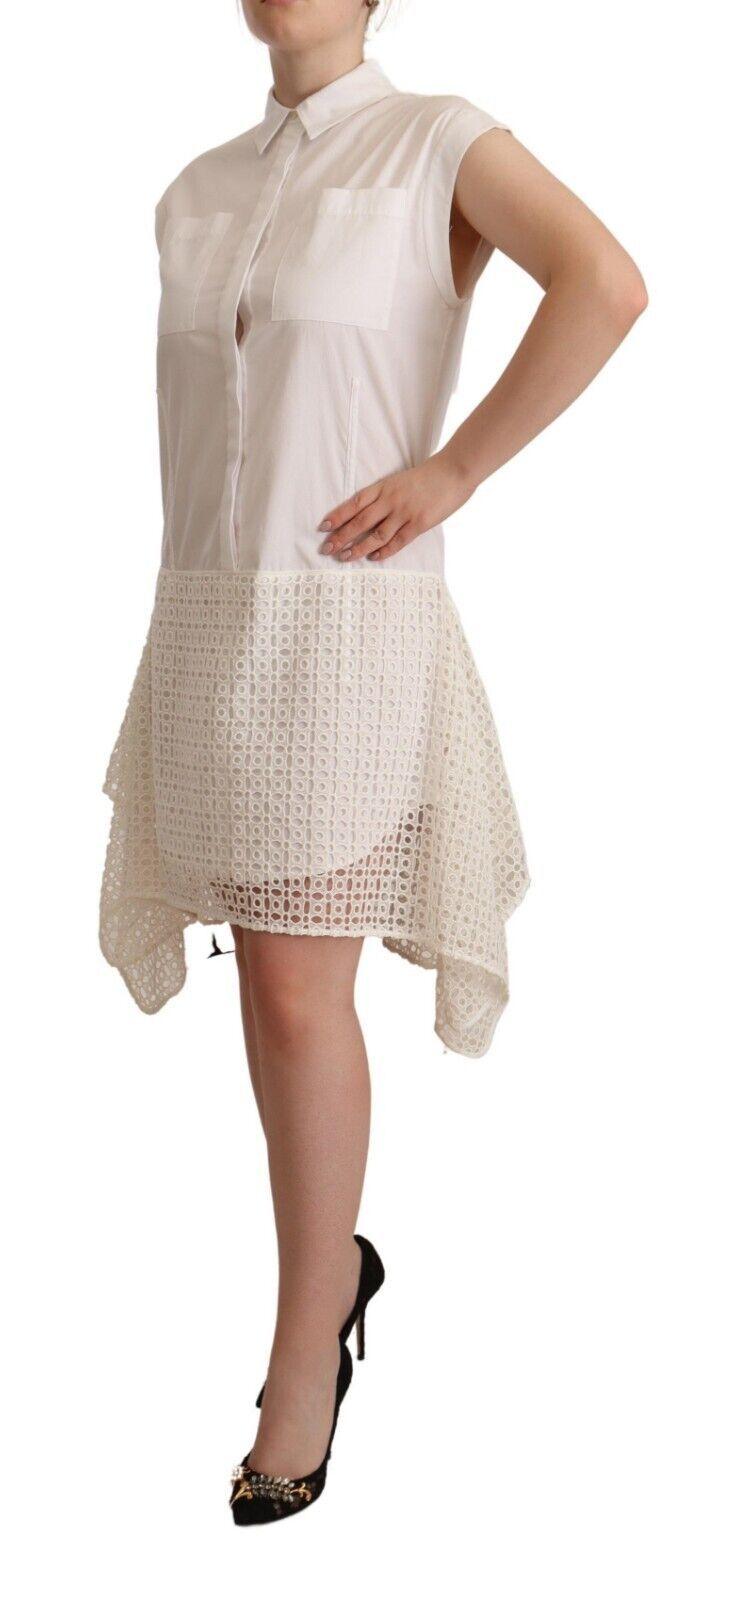 Elegant White Button-Down Cotton Dress - PER.FASHION